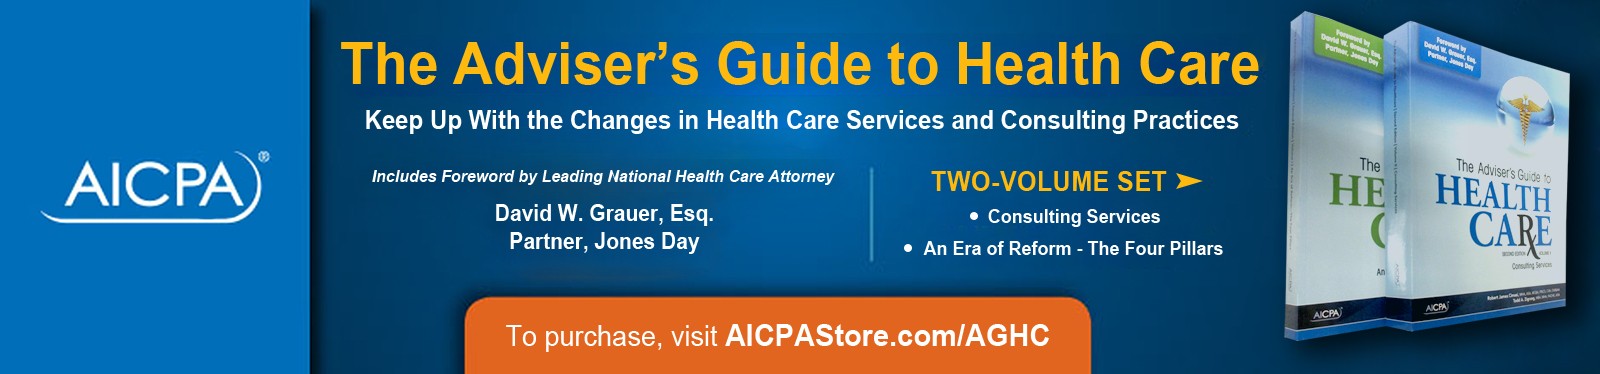 Advisor's Guide to Healthcare Banner